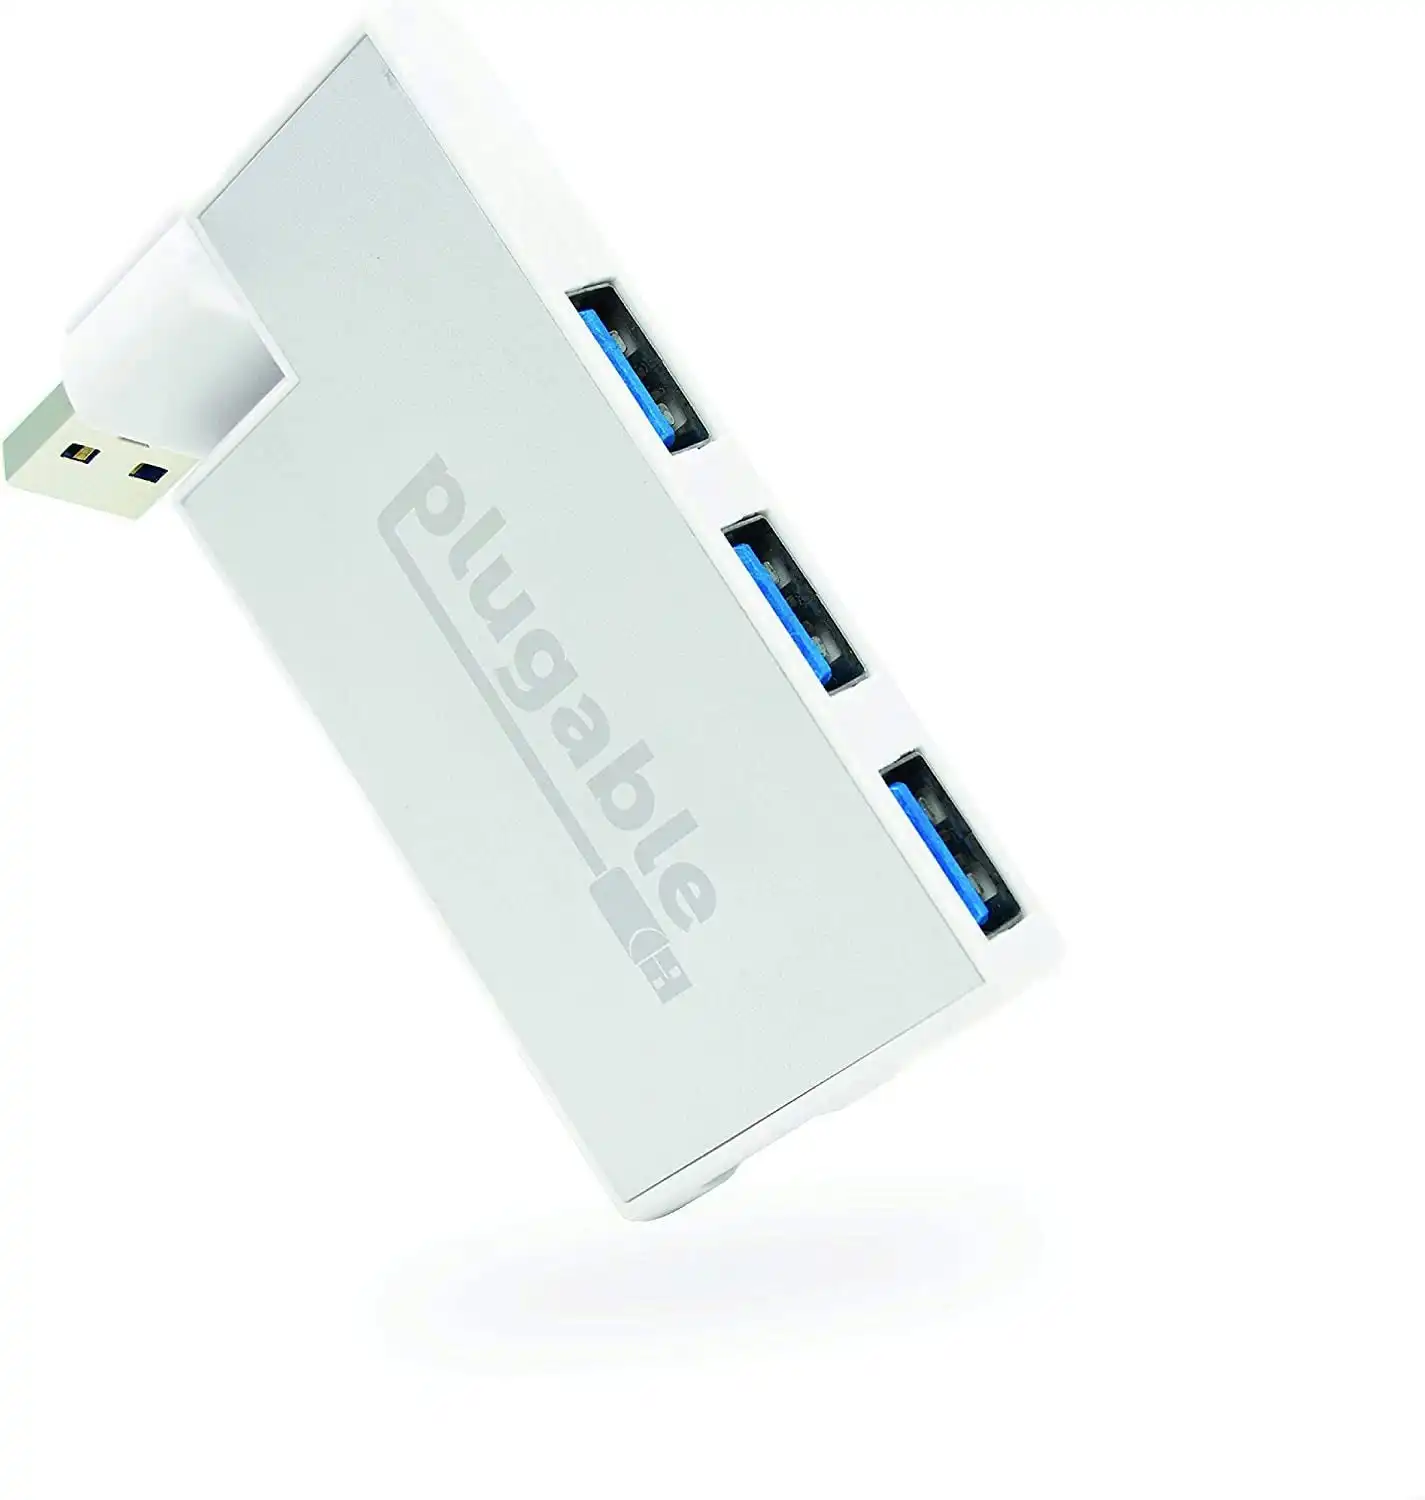 Plugable USB Hub, Rotating 4 Port USB 3.0 Hub, Powered USB Hub (Compatible with Windows, Macos & Linux, USB 2.0 Backwards Compatible)